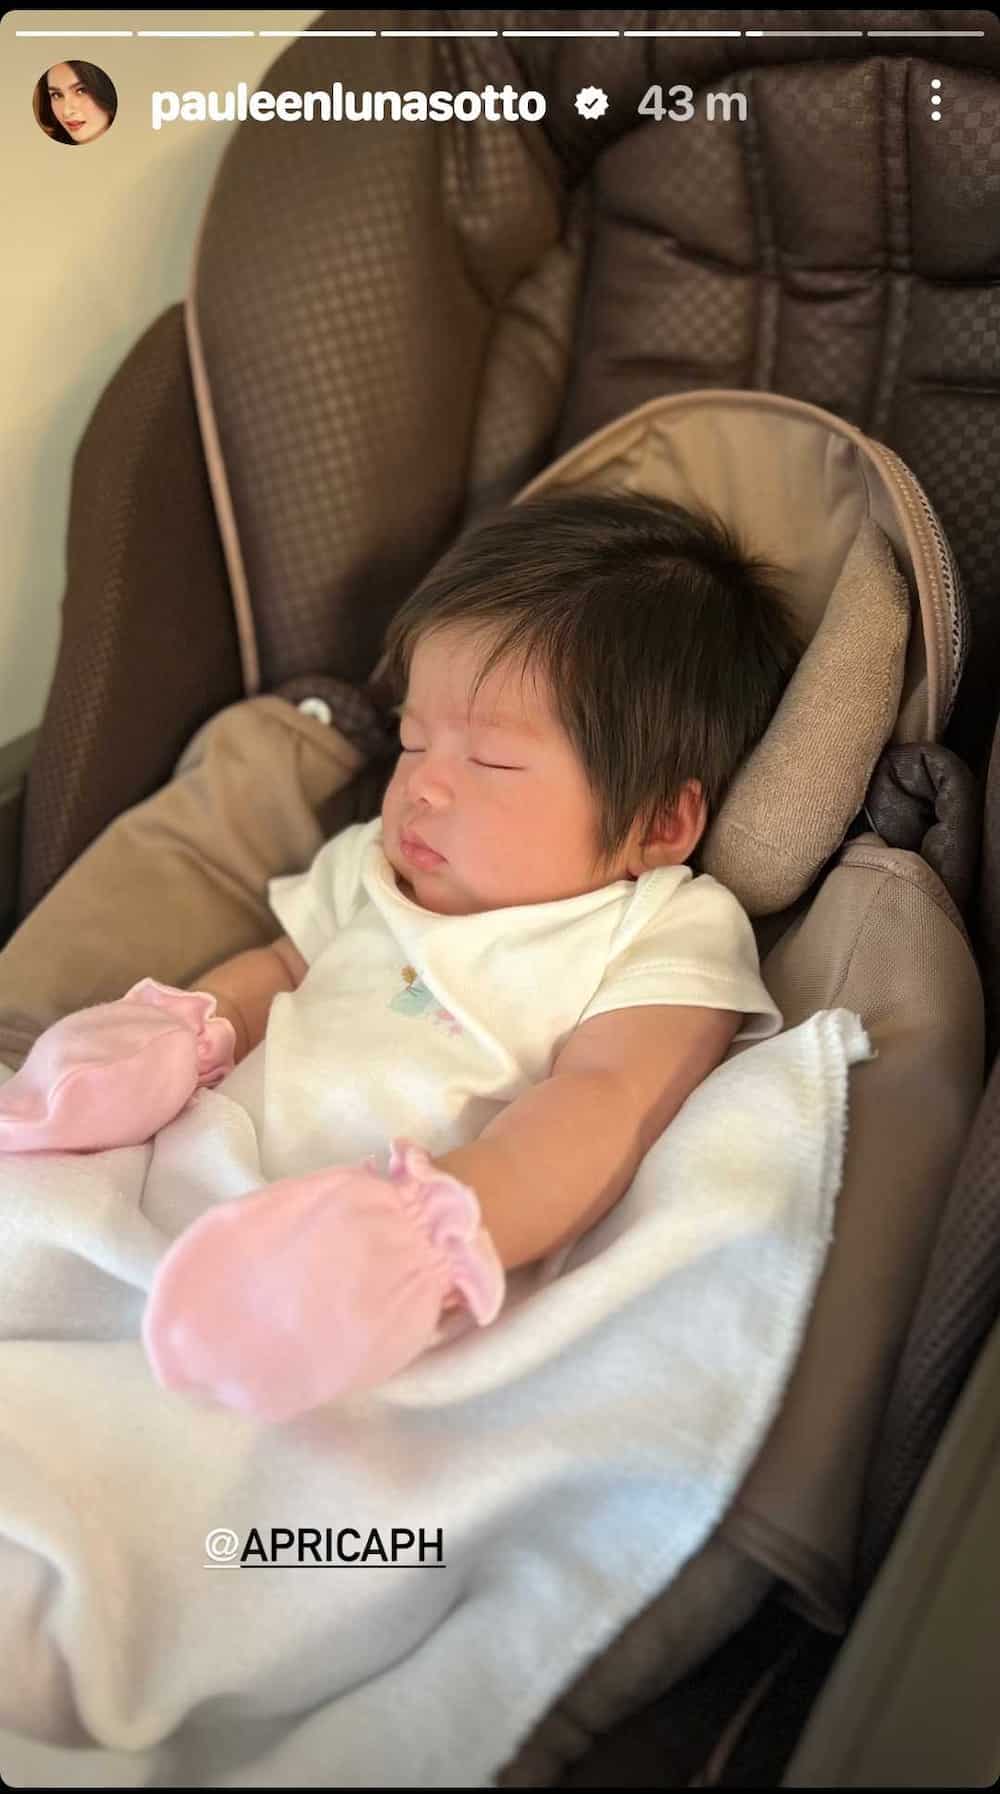 Pauleen Luna shares adorable photos of Baby Mochi sleeping soundly